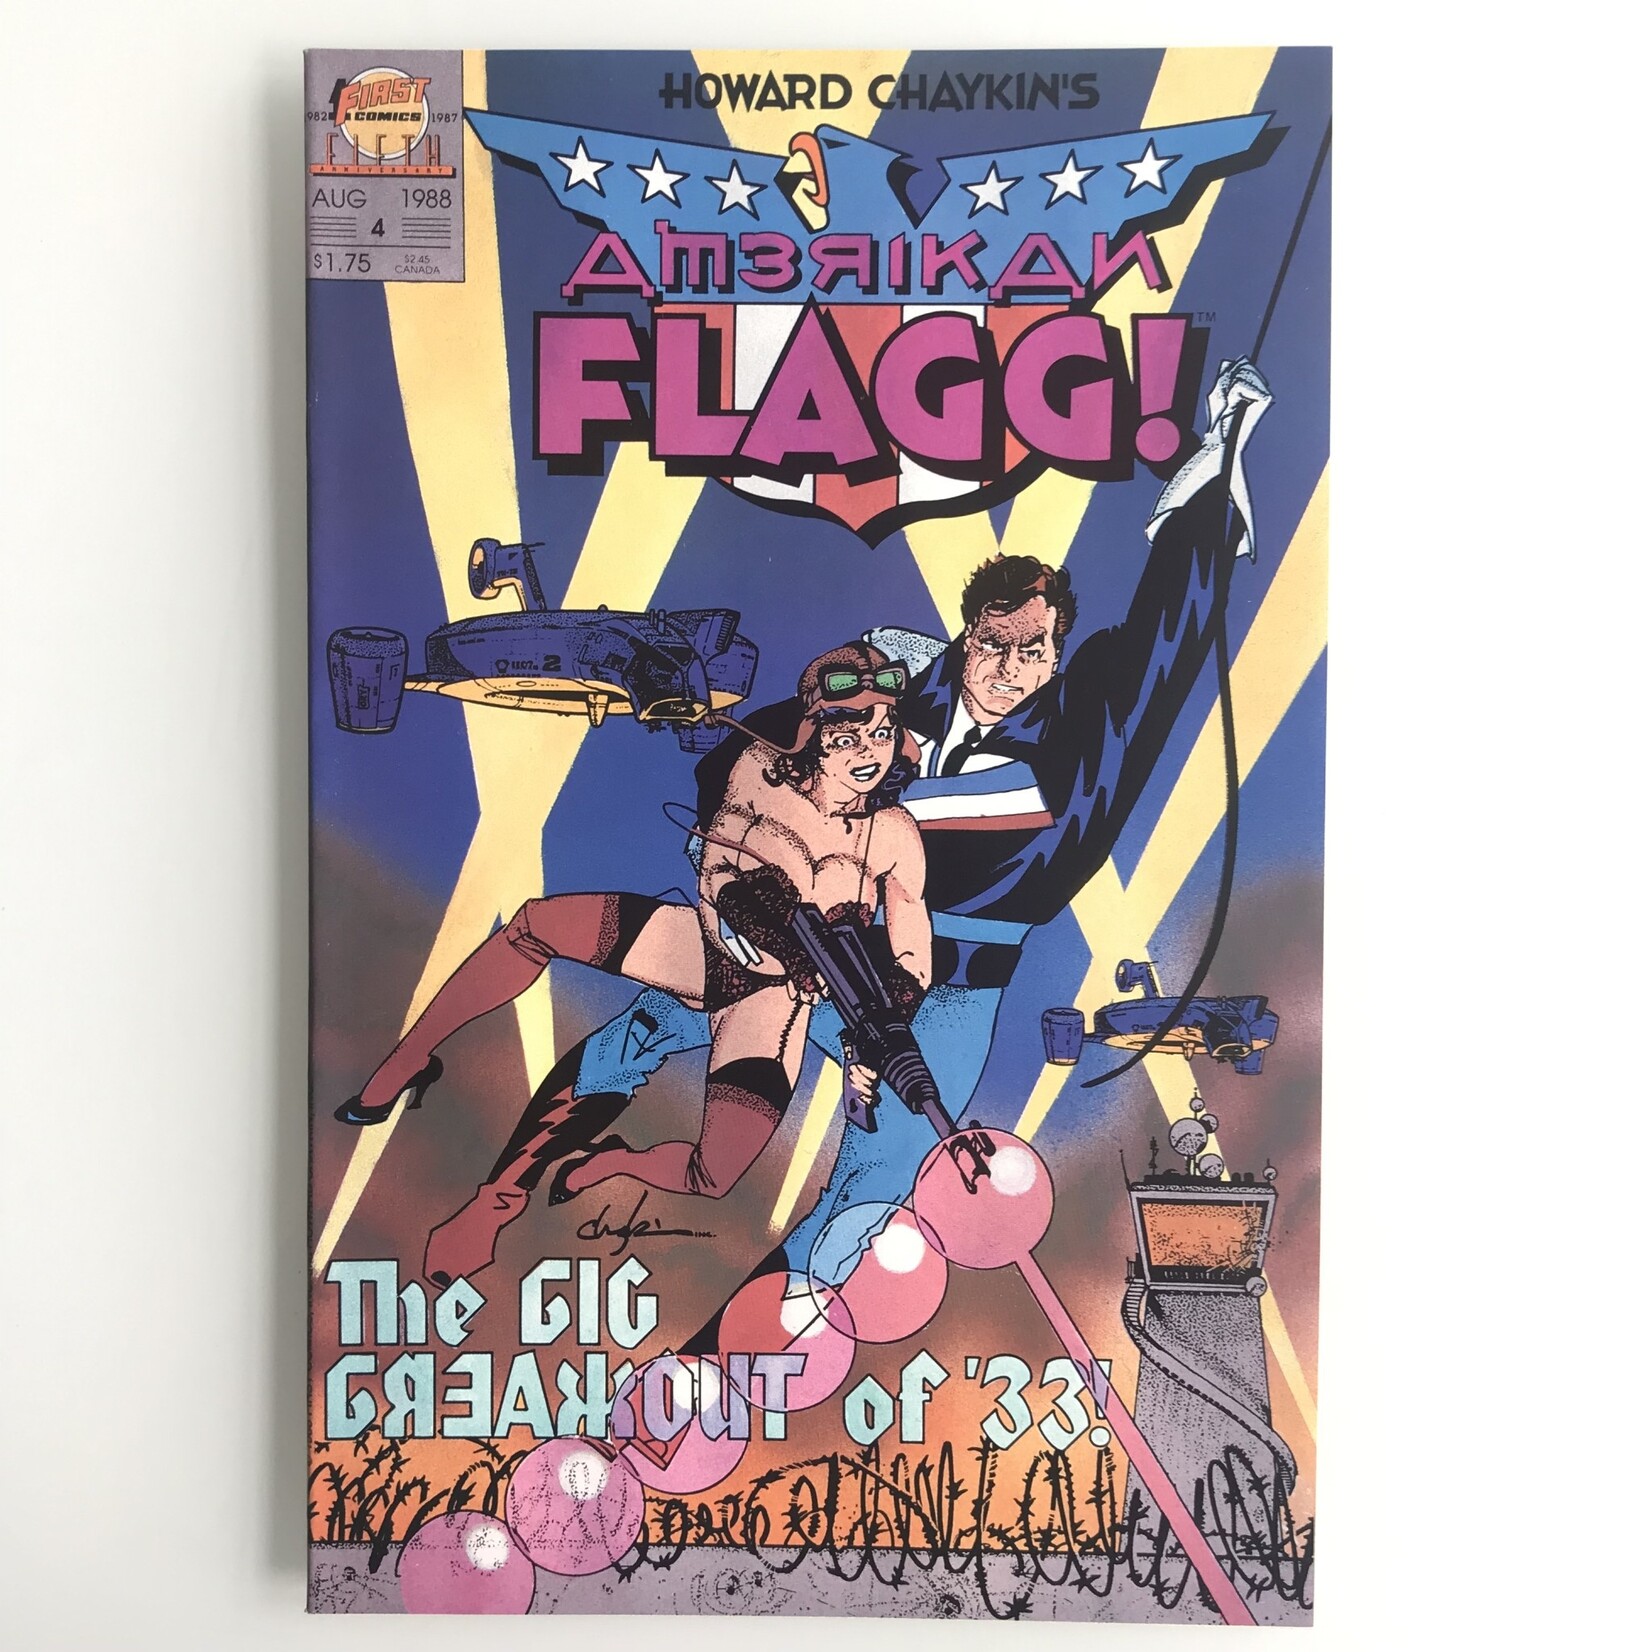 American Flagg! - Vol. 2 #04 August 1988 - Comic Book